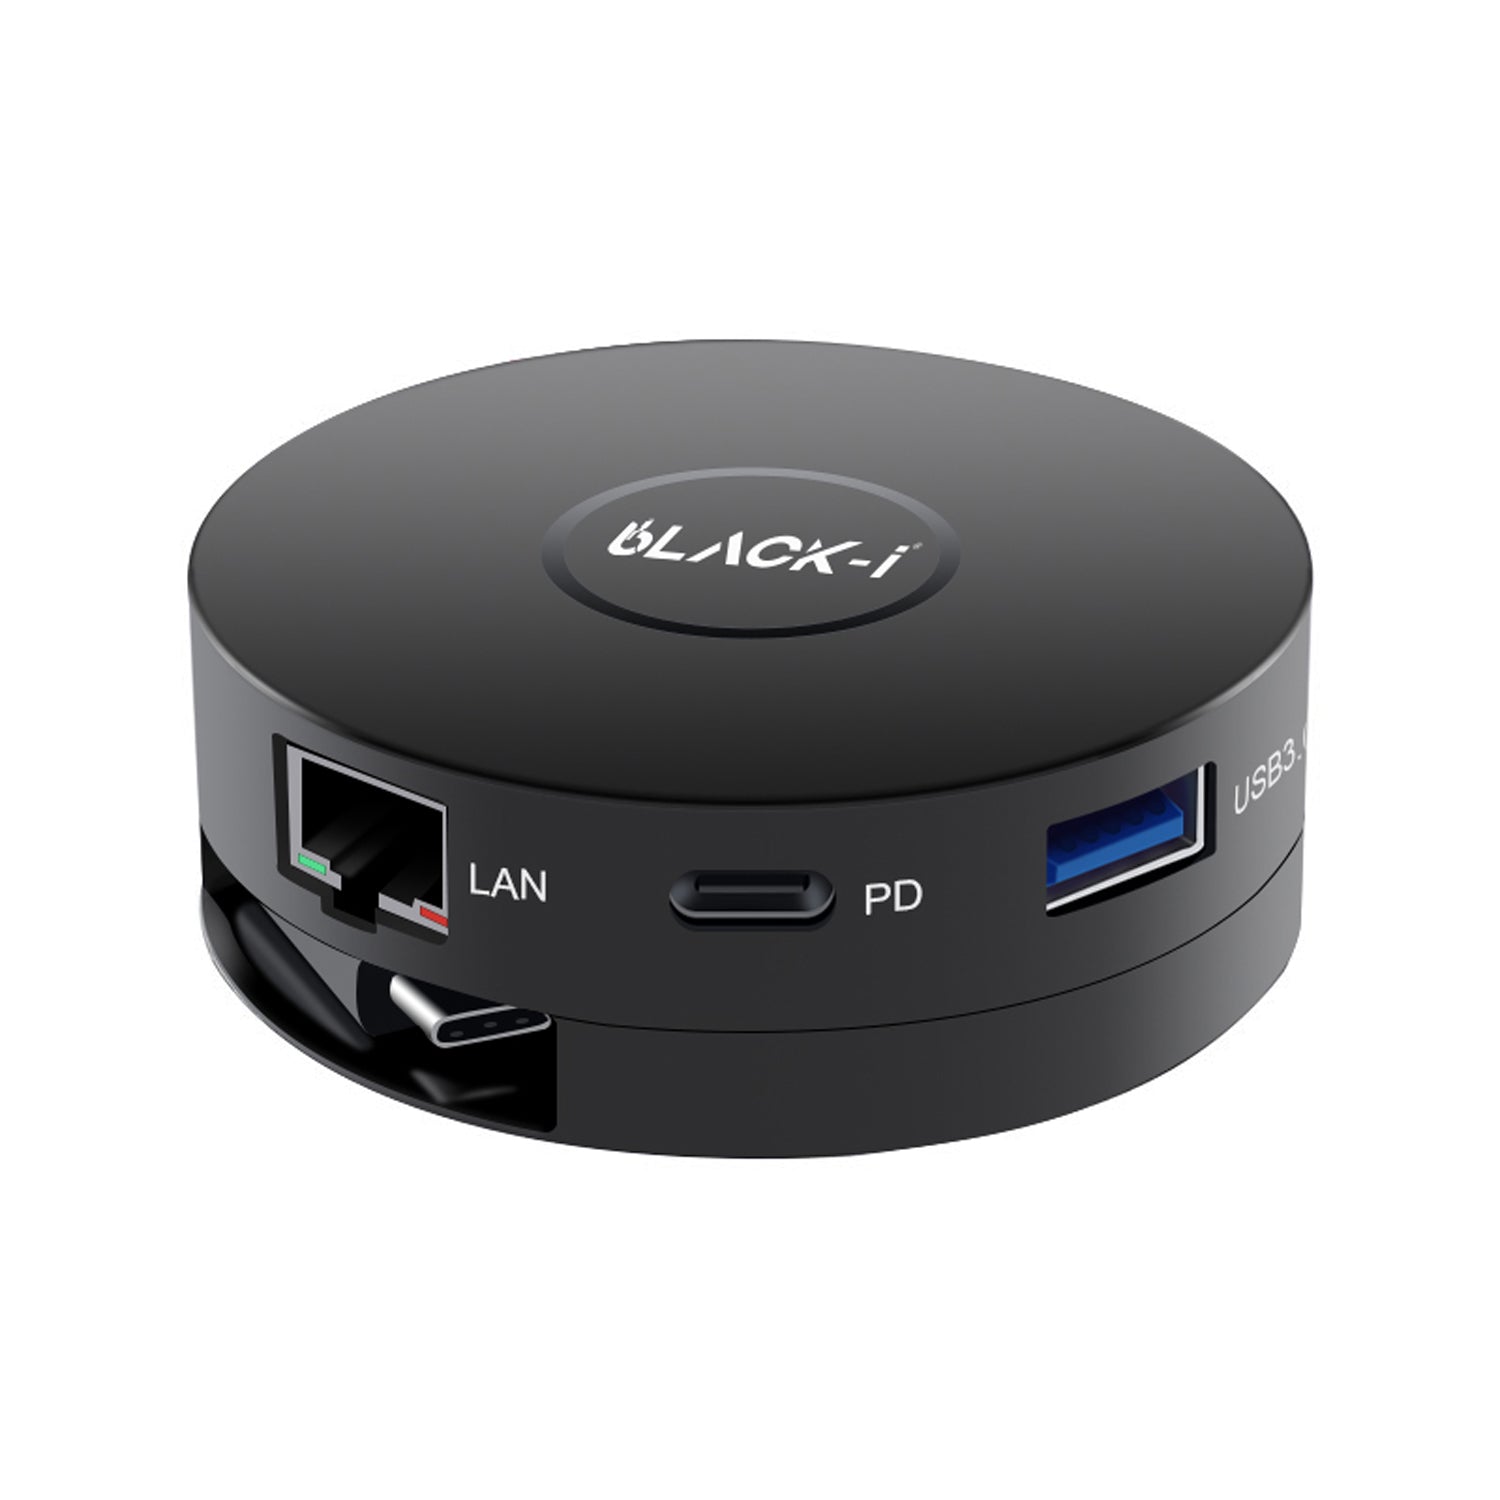 Black-i USB-C 5-in-1 Hub – HDMI, VGA, USB 3.0, Gigabit LAN, USB 3.0 & PD – Versatile Connectivity for Enhanced Productivity and Multimedia Experience